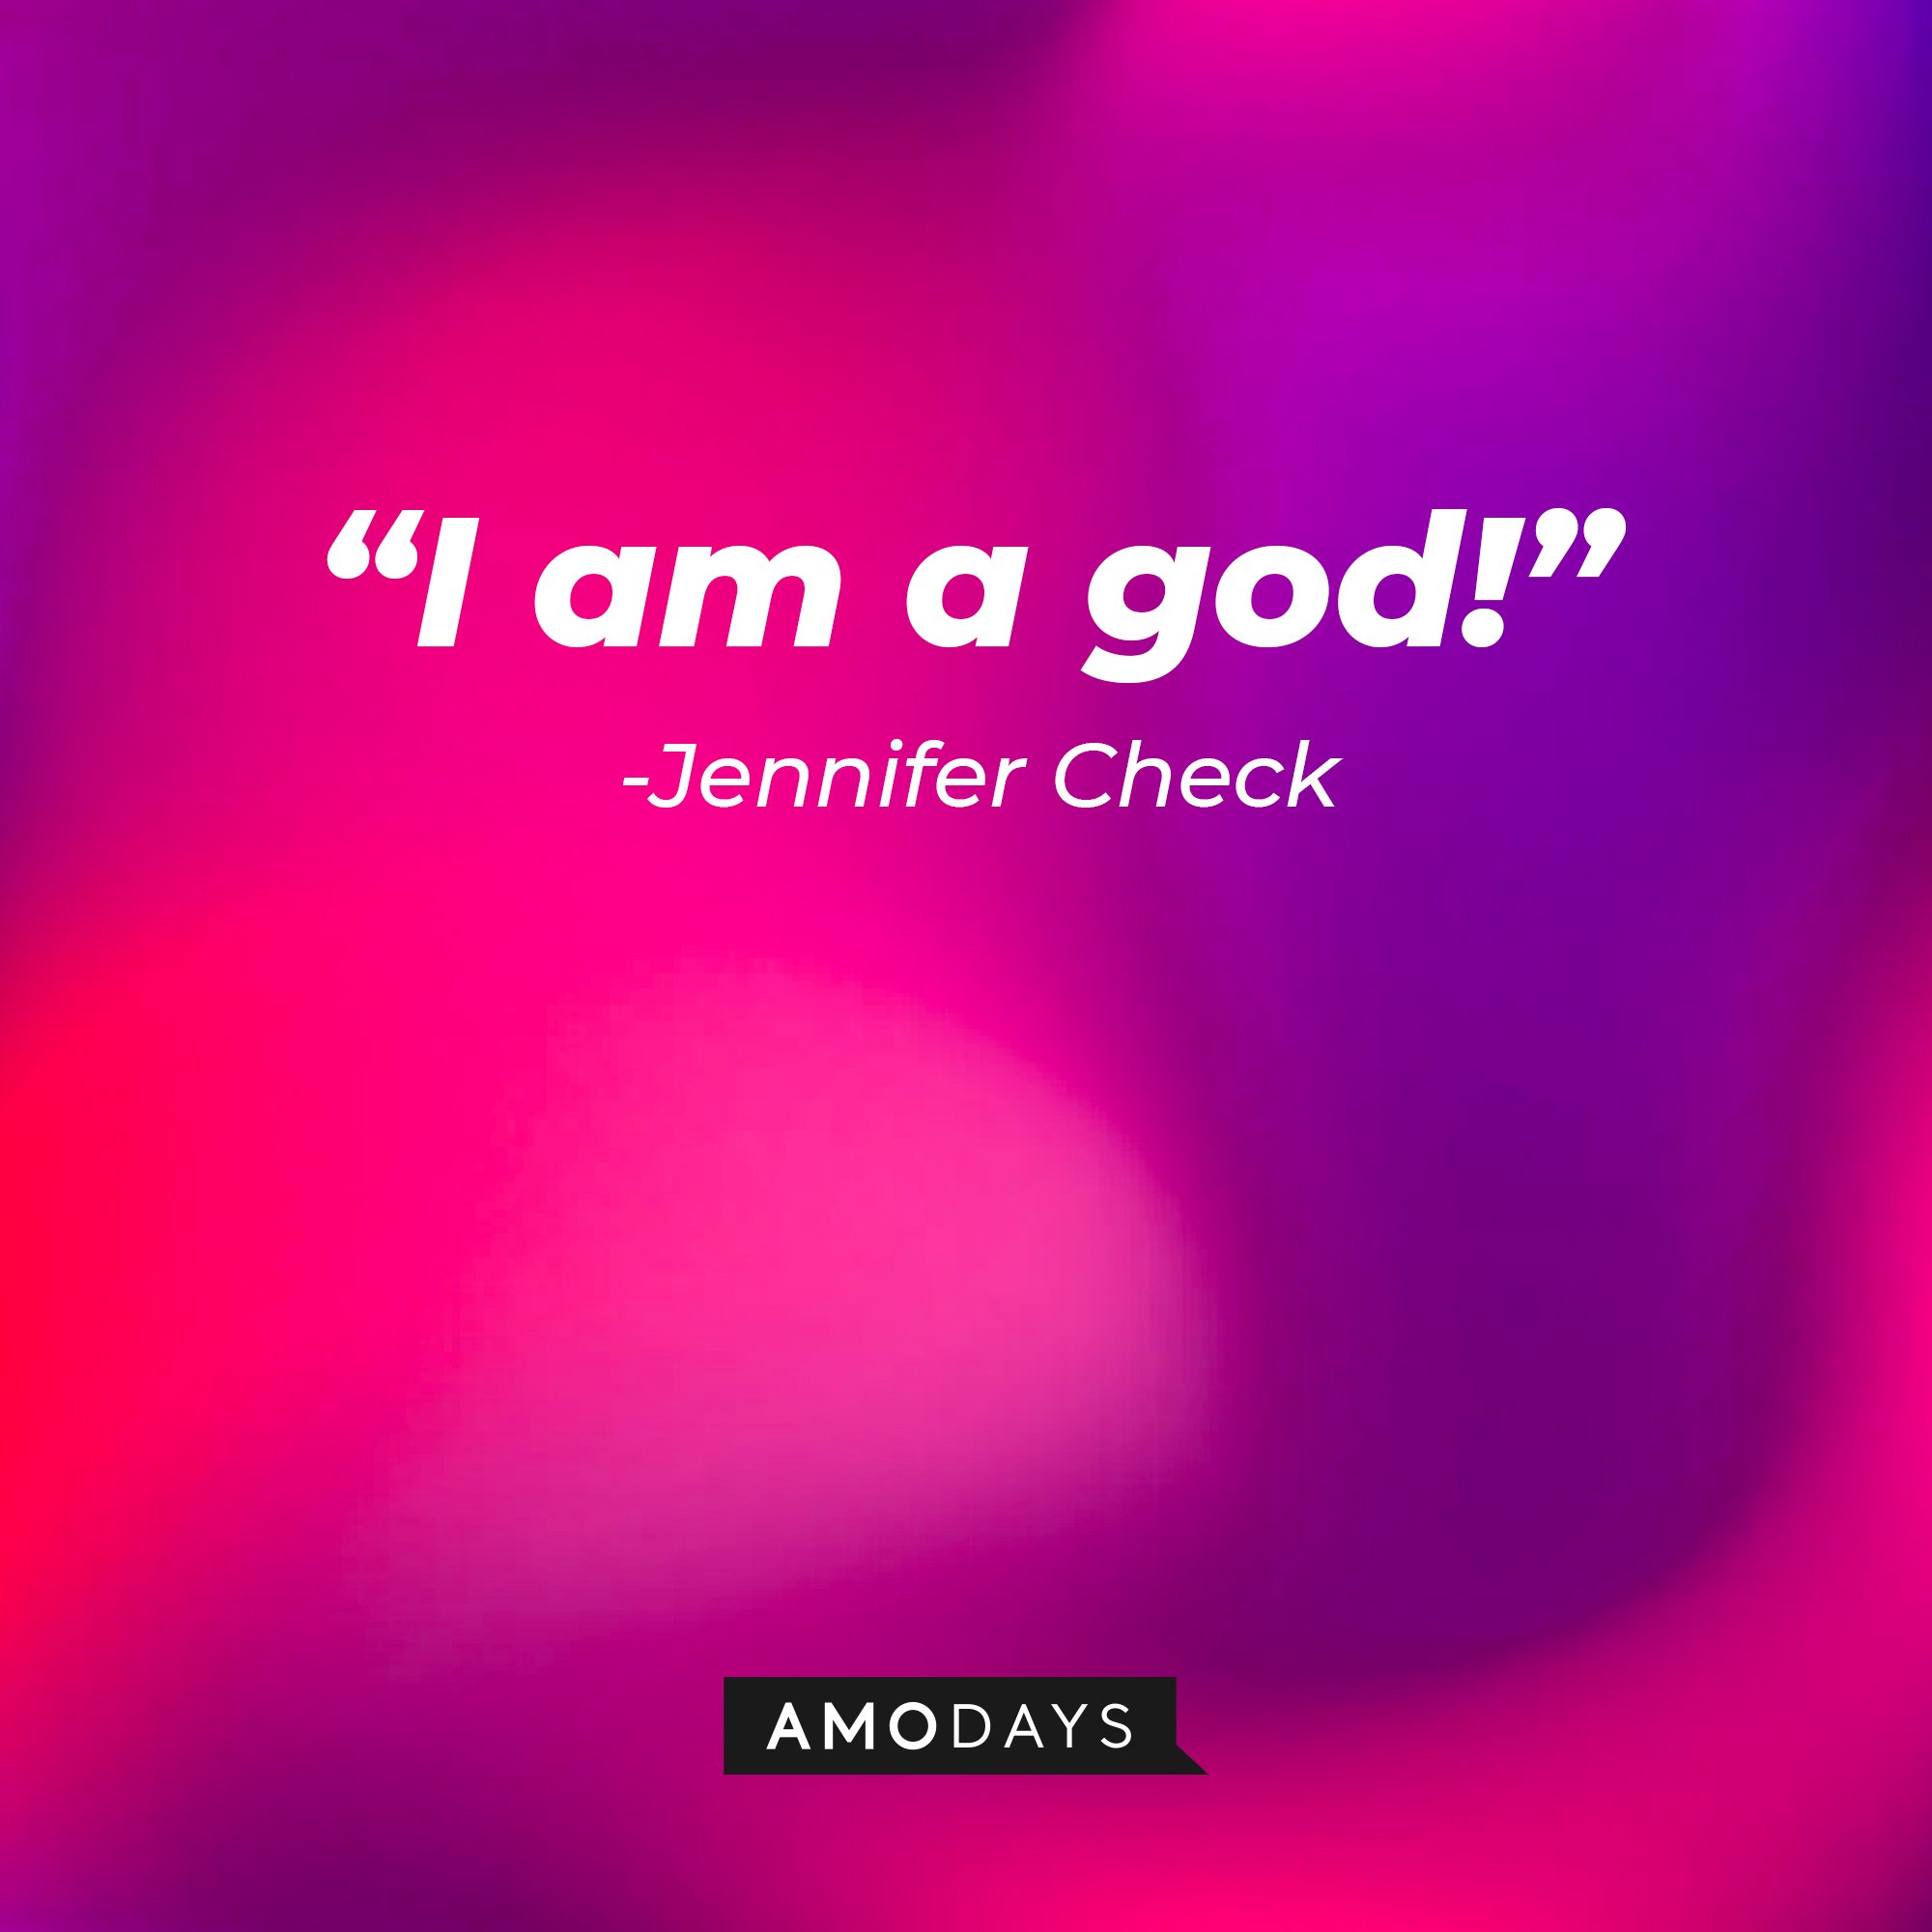 Jennifer Check’s quote: “I am a god!” |Image: AmoDays